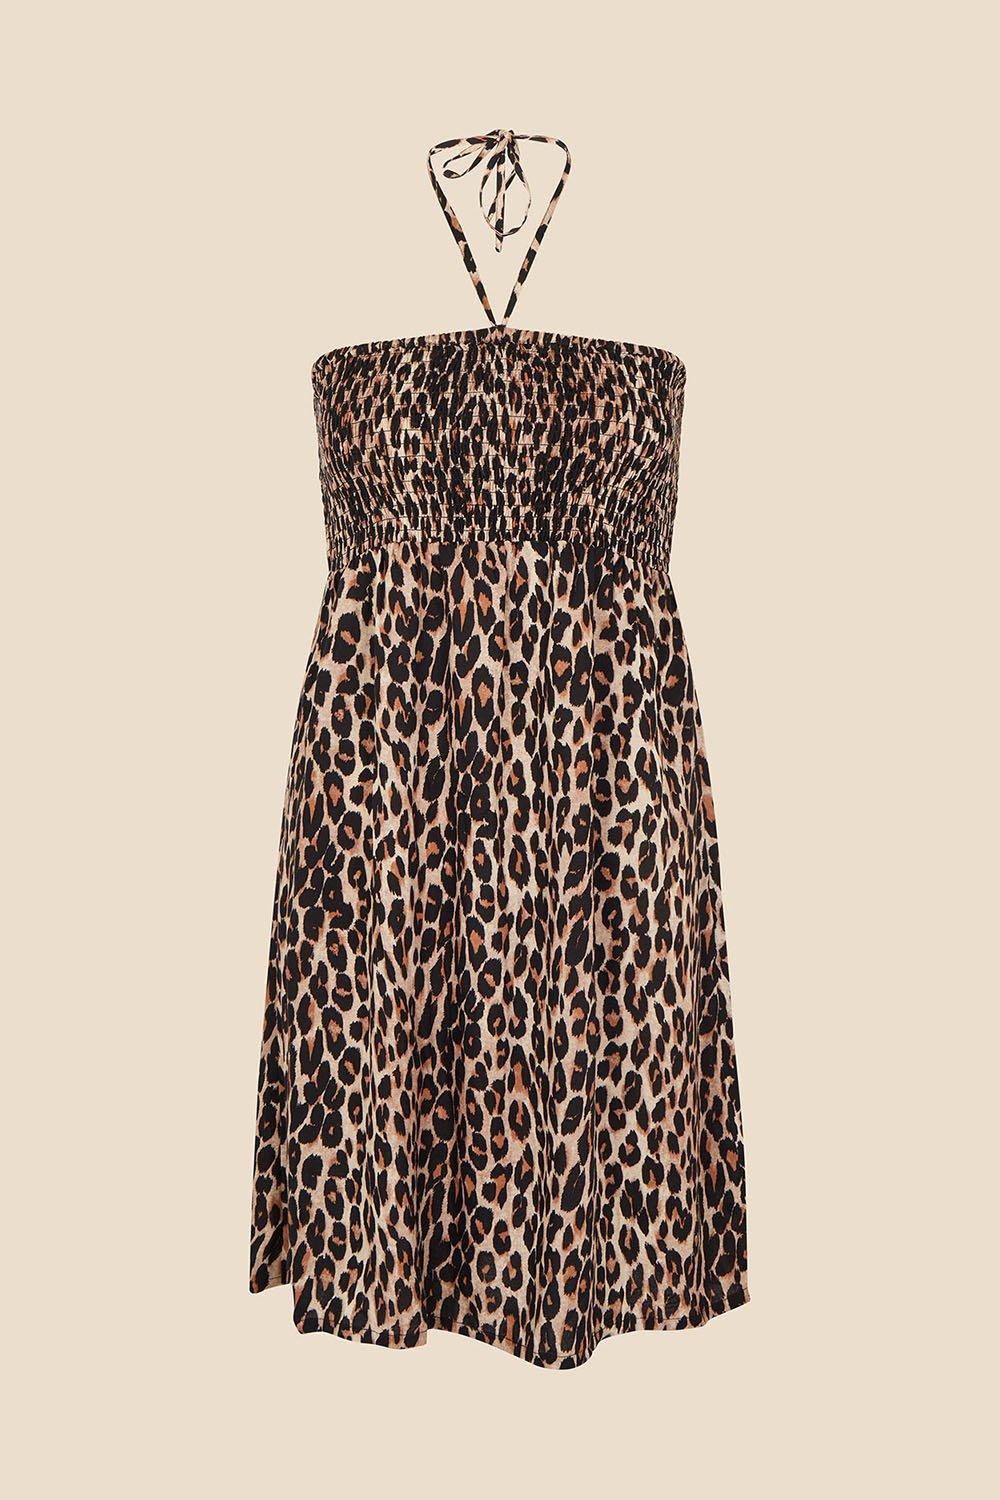 Beachwear | Leopard Print Bandeau Dress | Accessorize